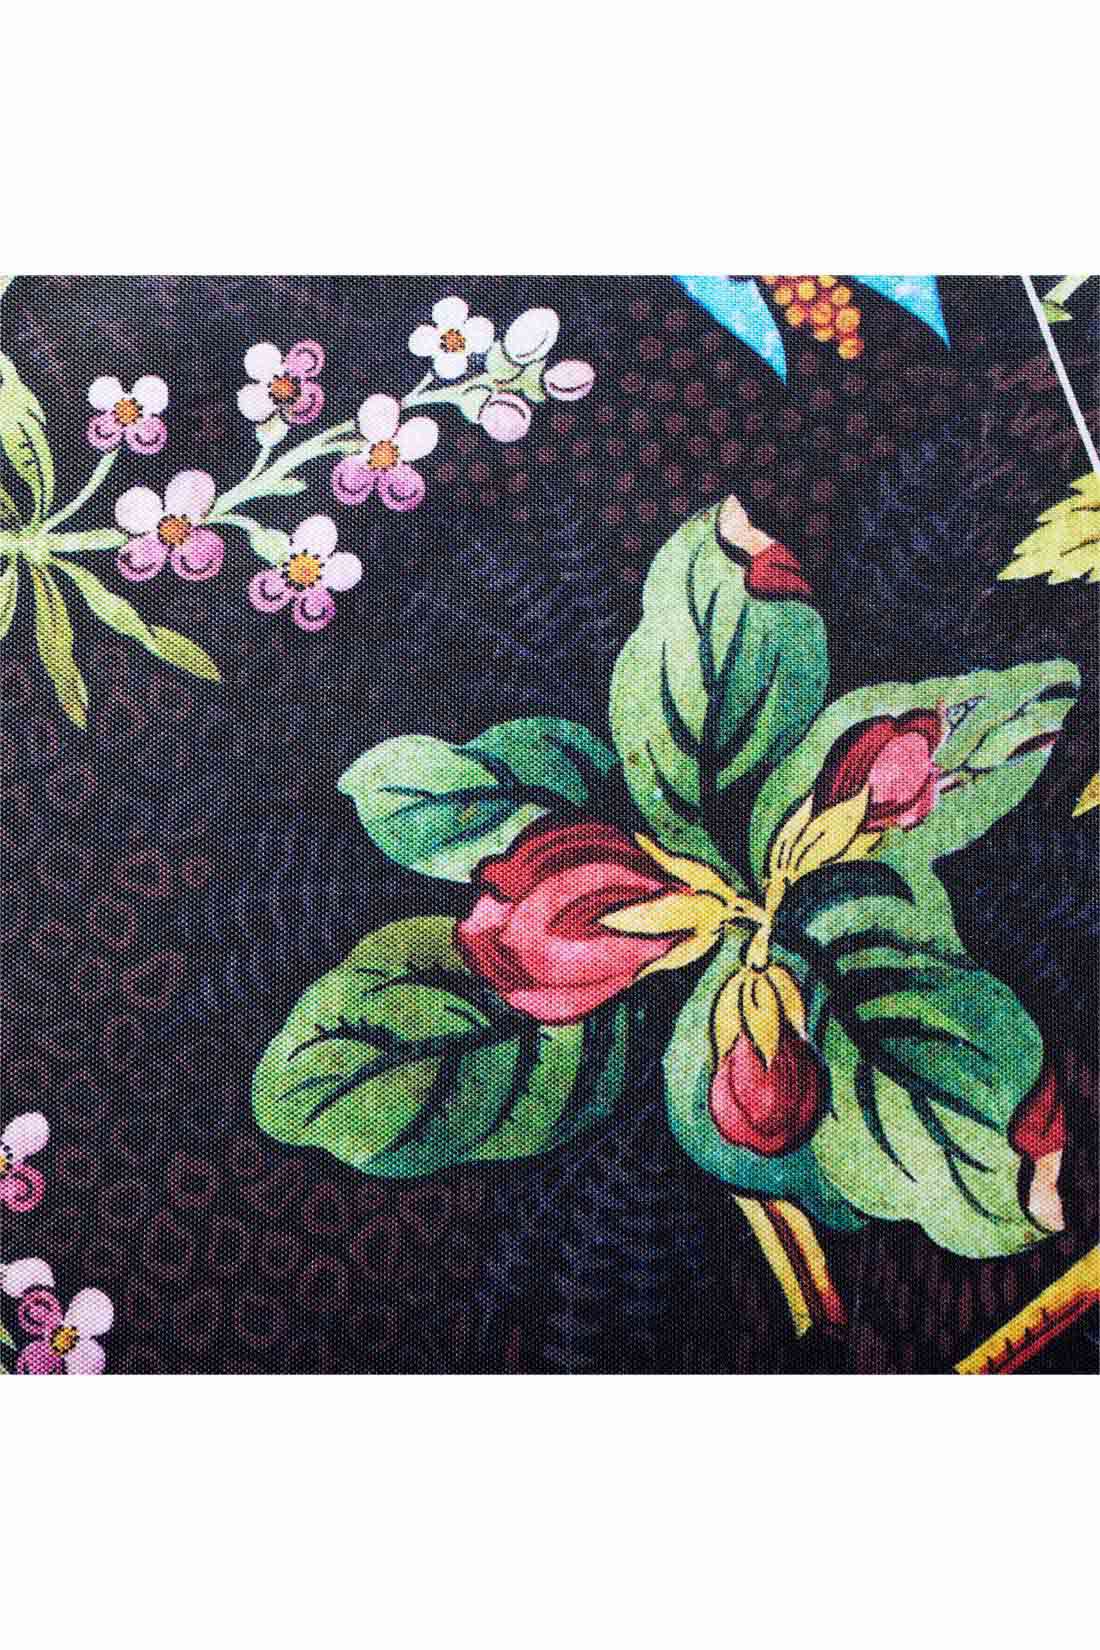 MEDE19F|【MEDE19F】ミュルーズモダン〈「ミュルーズ染織美術館」 アーカイブコレクション〉晴雨兼用折りたたみ傘〈ブラック〉|シックに描かれた花や果実が、古い植物図鑑のよう